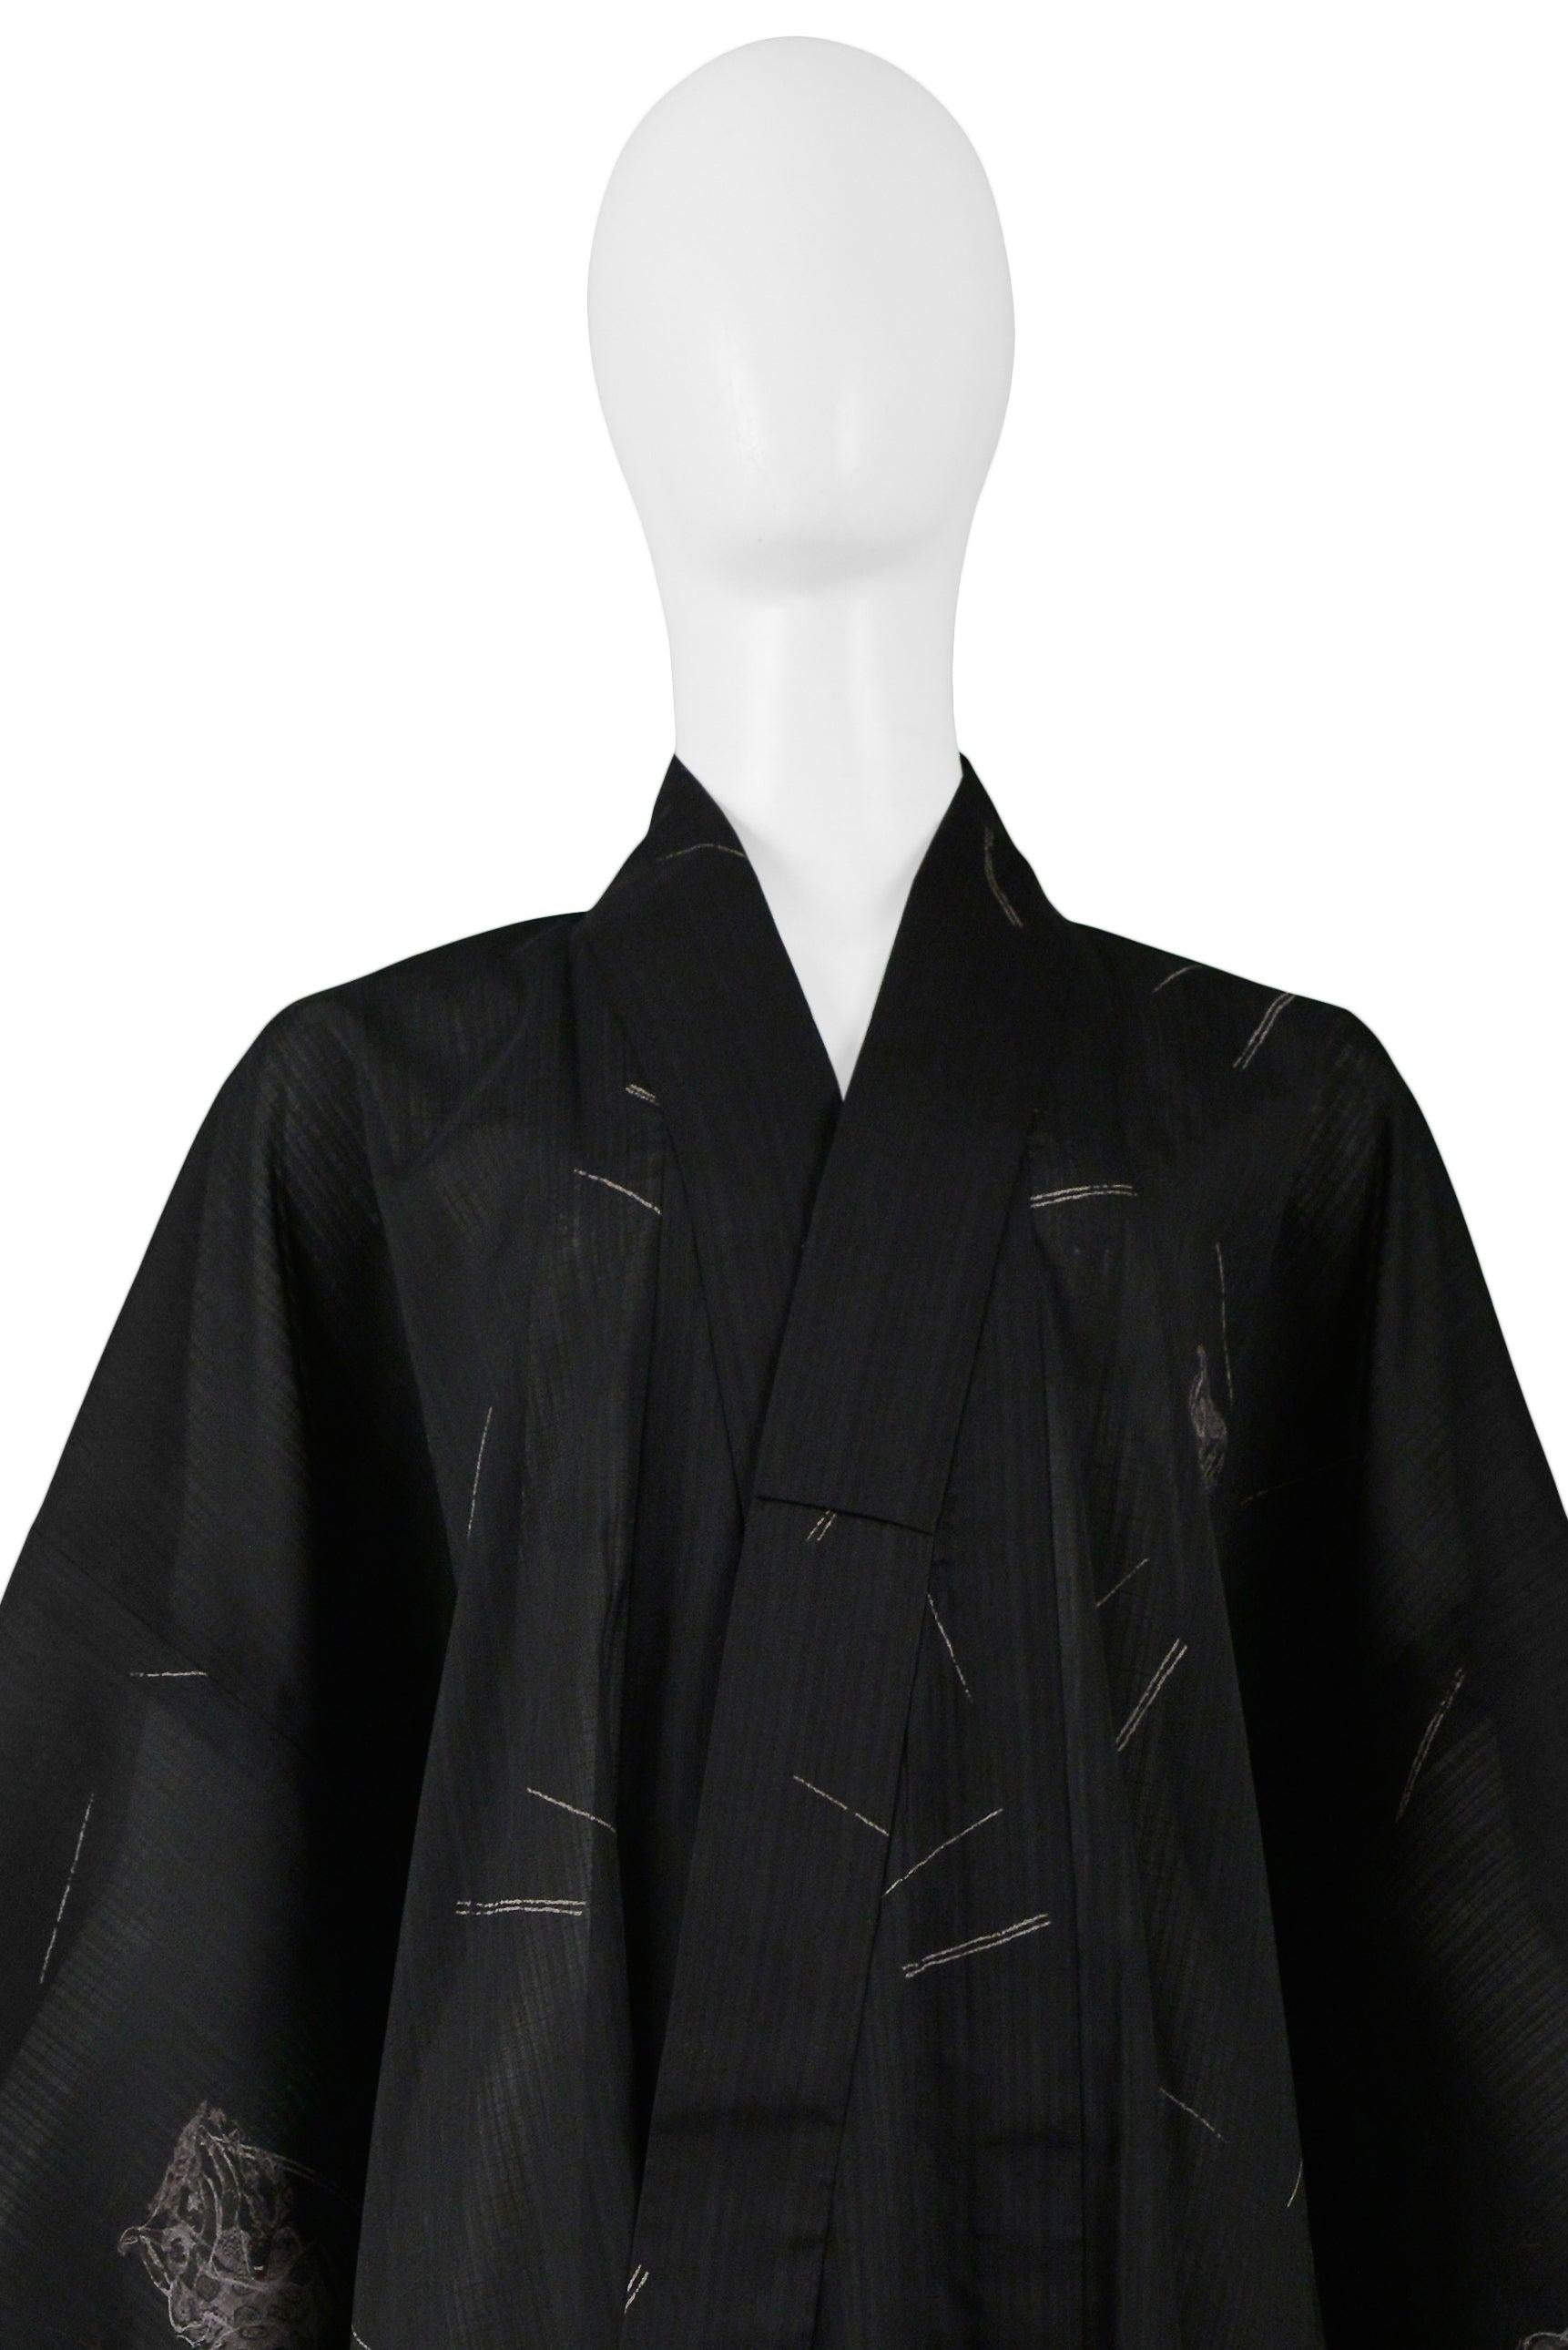 Jean Paul Gaultier Black & Gray Dancers Kimono Robe 2002 In Excellent Condition For Sale In Los Angeles, CA